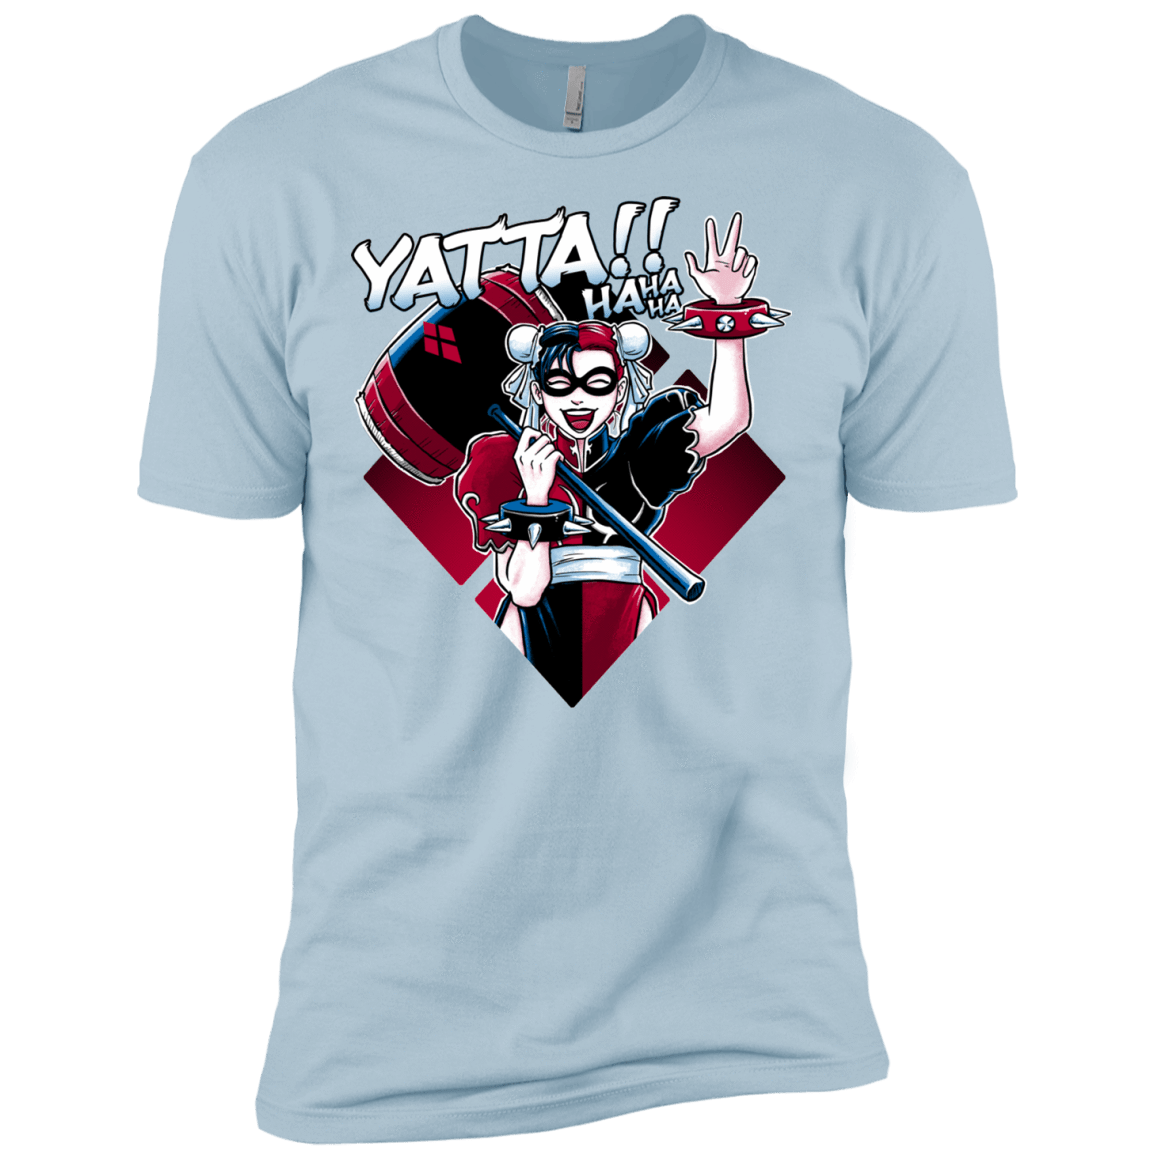 T-Shirts Light Blue / X-Small Harley Yatta Men's Premium T-Shirt